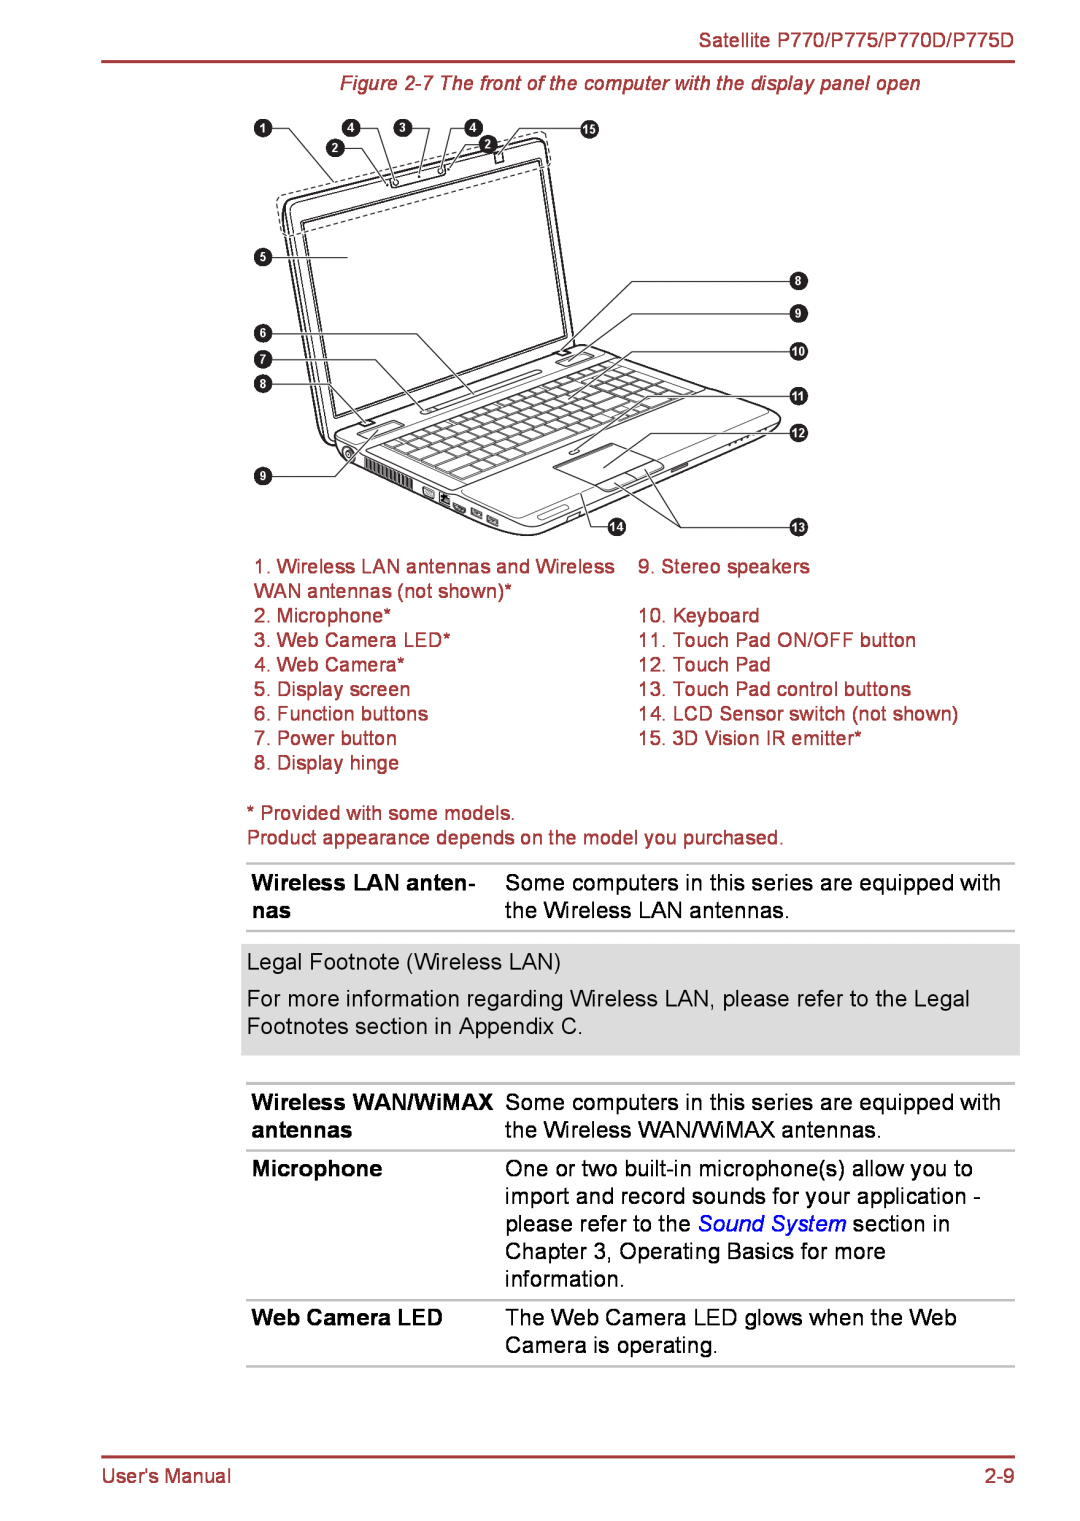 Toshiba P770 user manual the Wireless LAN antennas, Wireless WAN/WiMAX, Microphone, Web Camera LED 